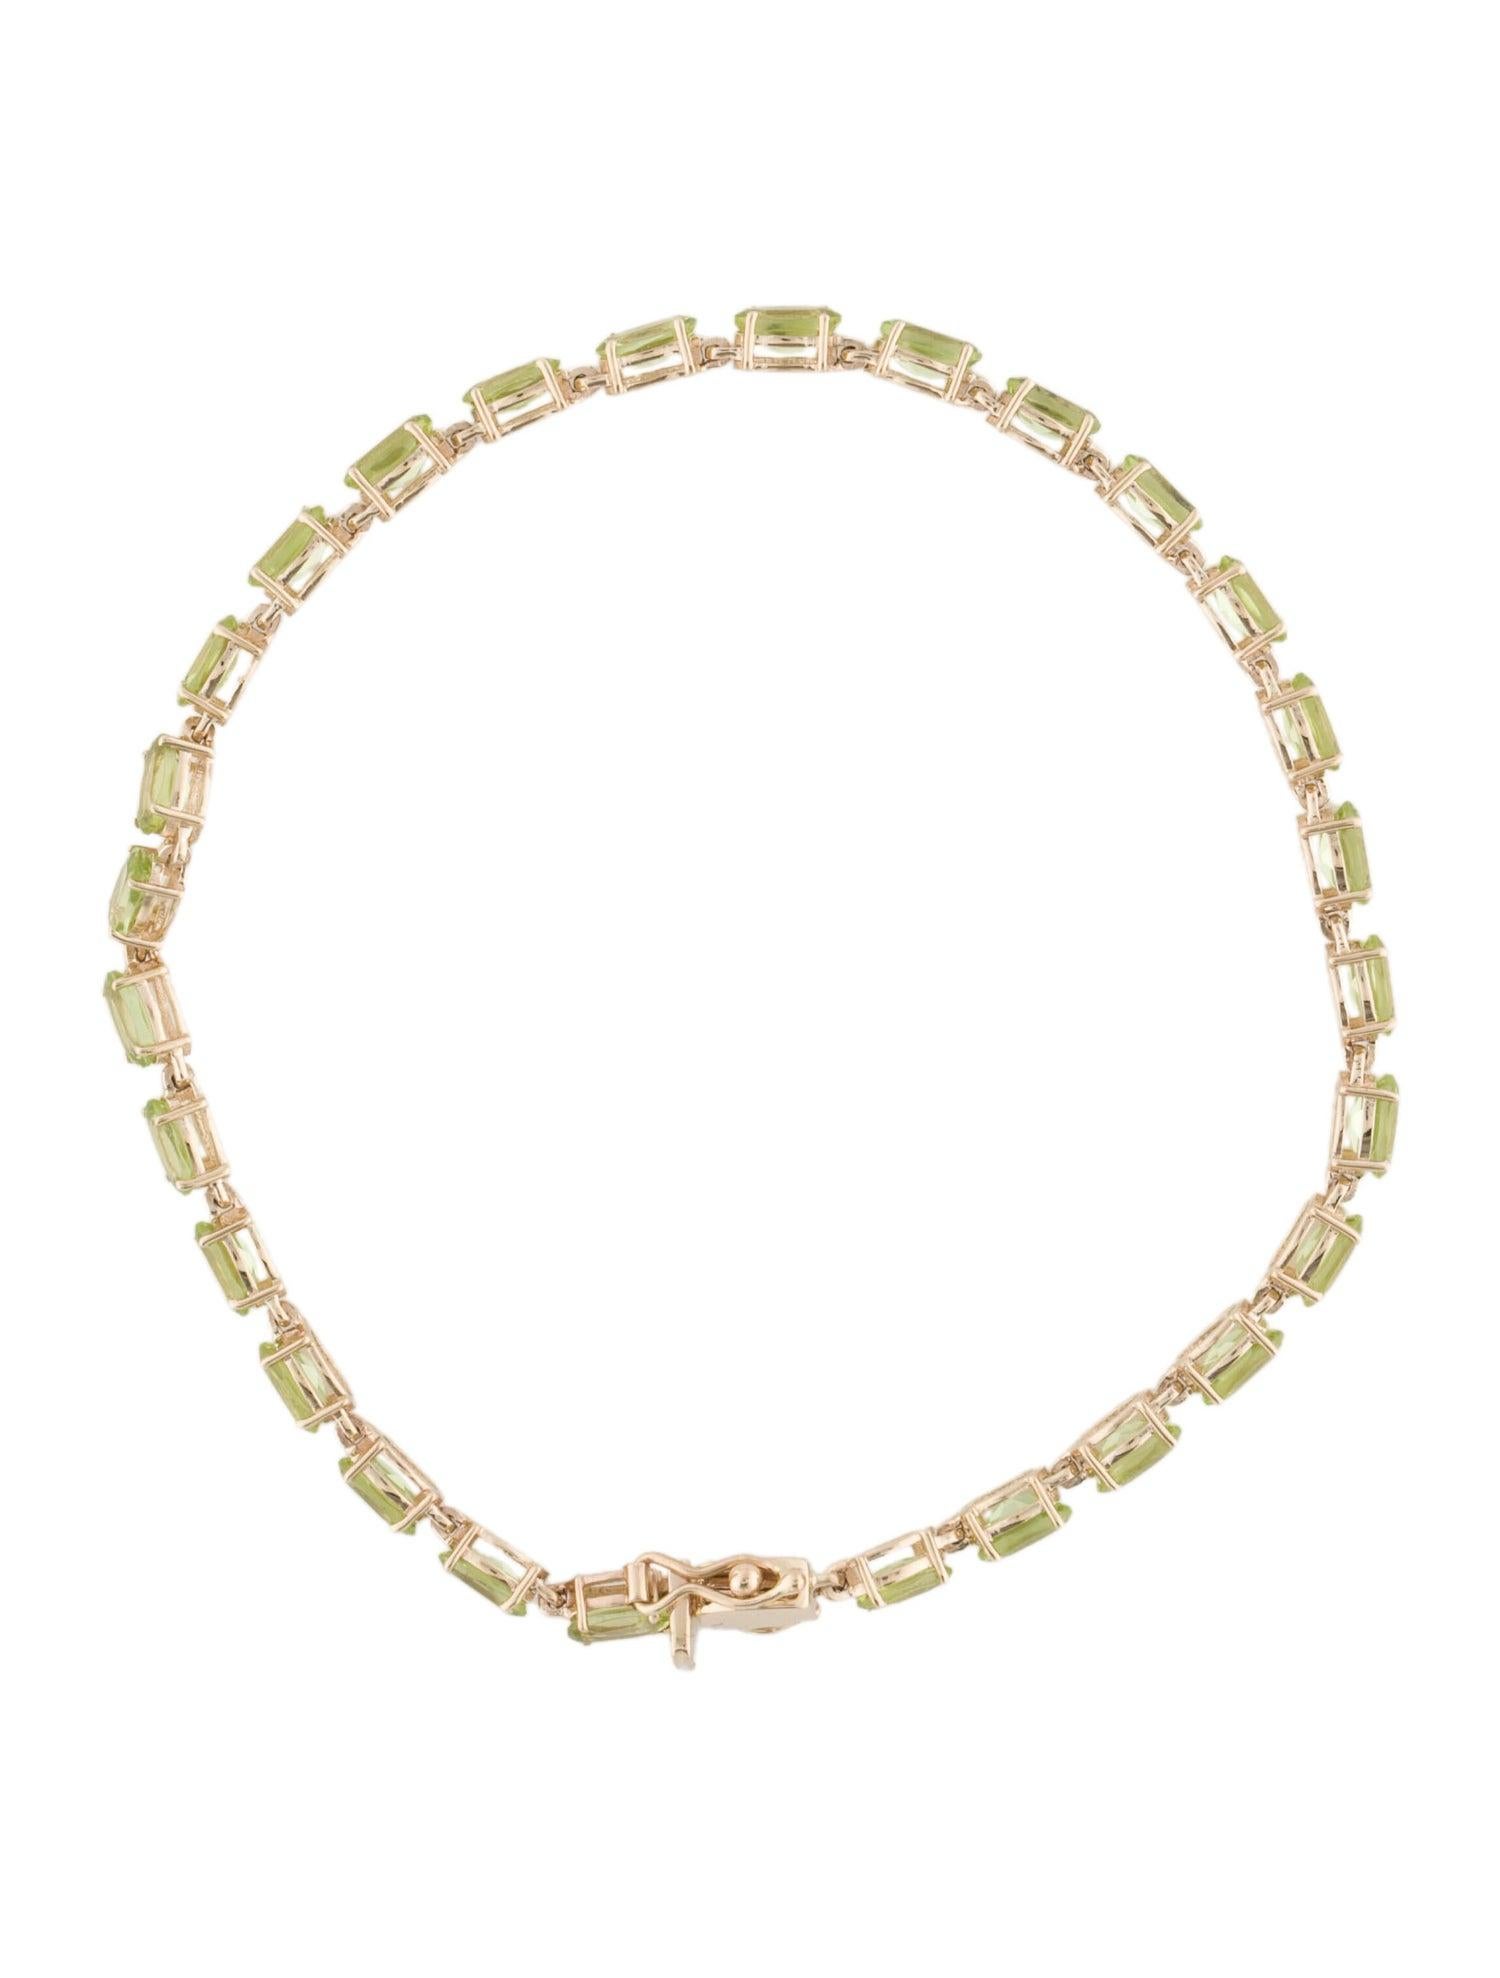 Brilliant Cut 14K Peridot Link Bracelet - Vibrant Gemstone Elegance, Timeless Luxury Design For Sale